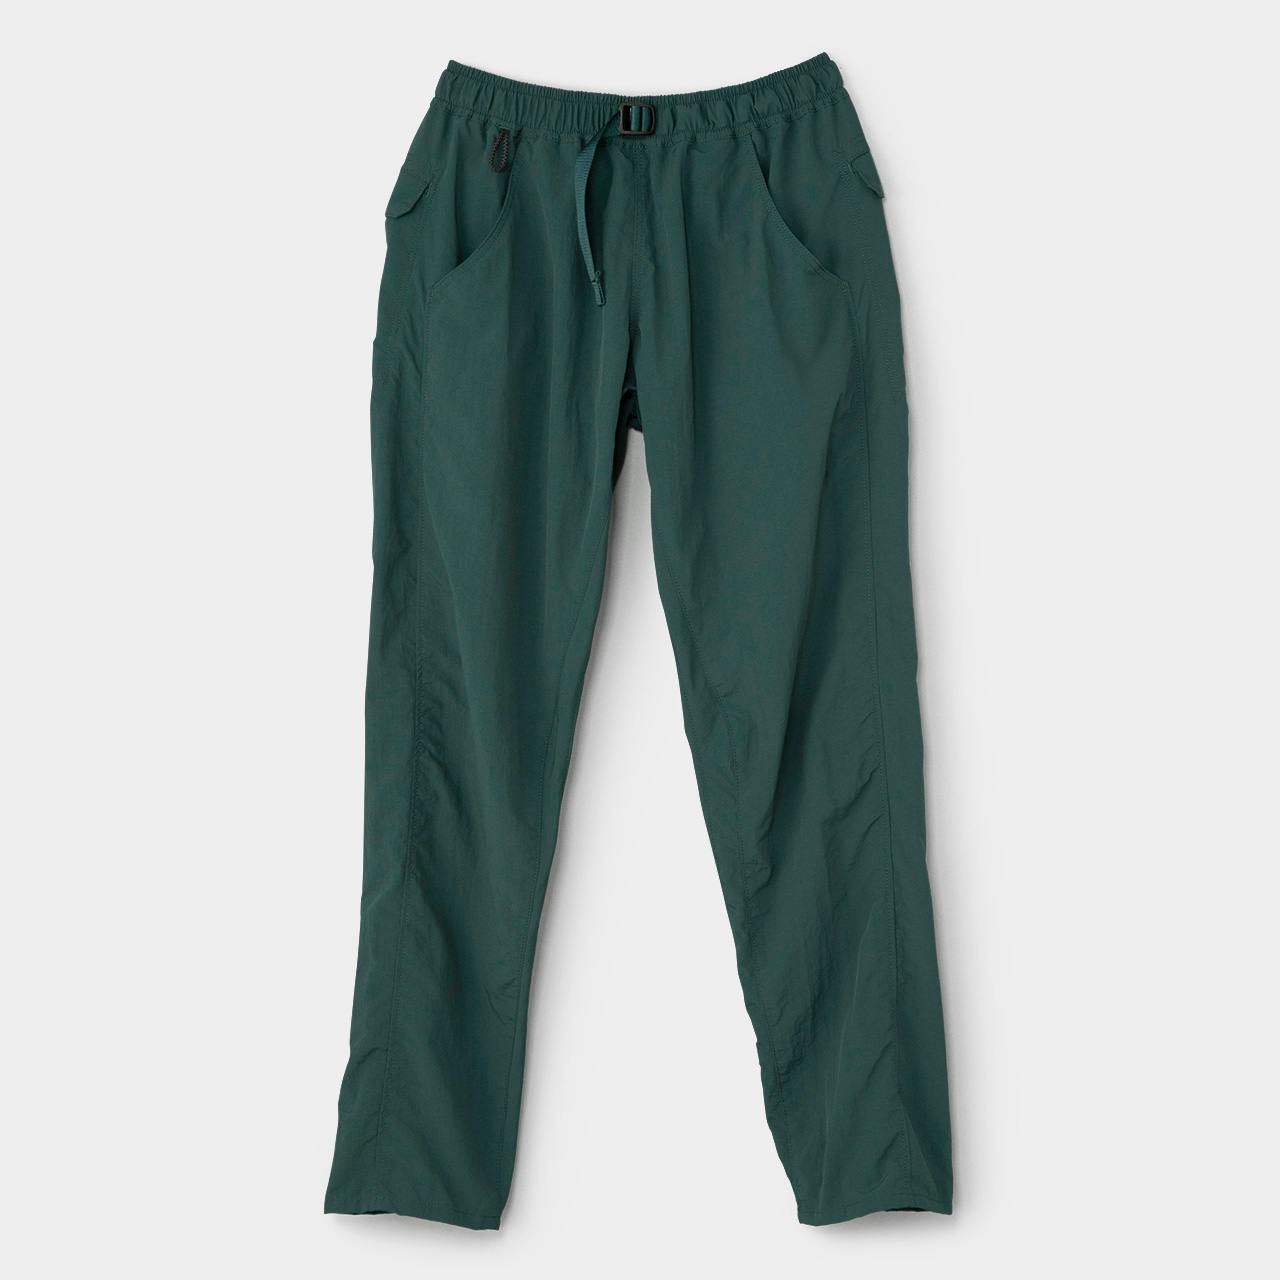 5-Pocket Pants (Women)<br>Origin of Yamatomichi Pants Series<br>For Sale Apr 17, 18:00 JST